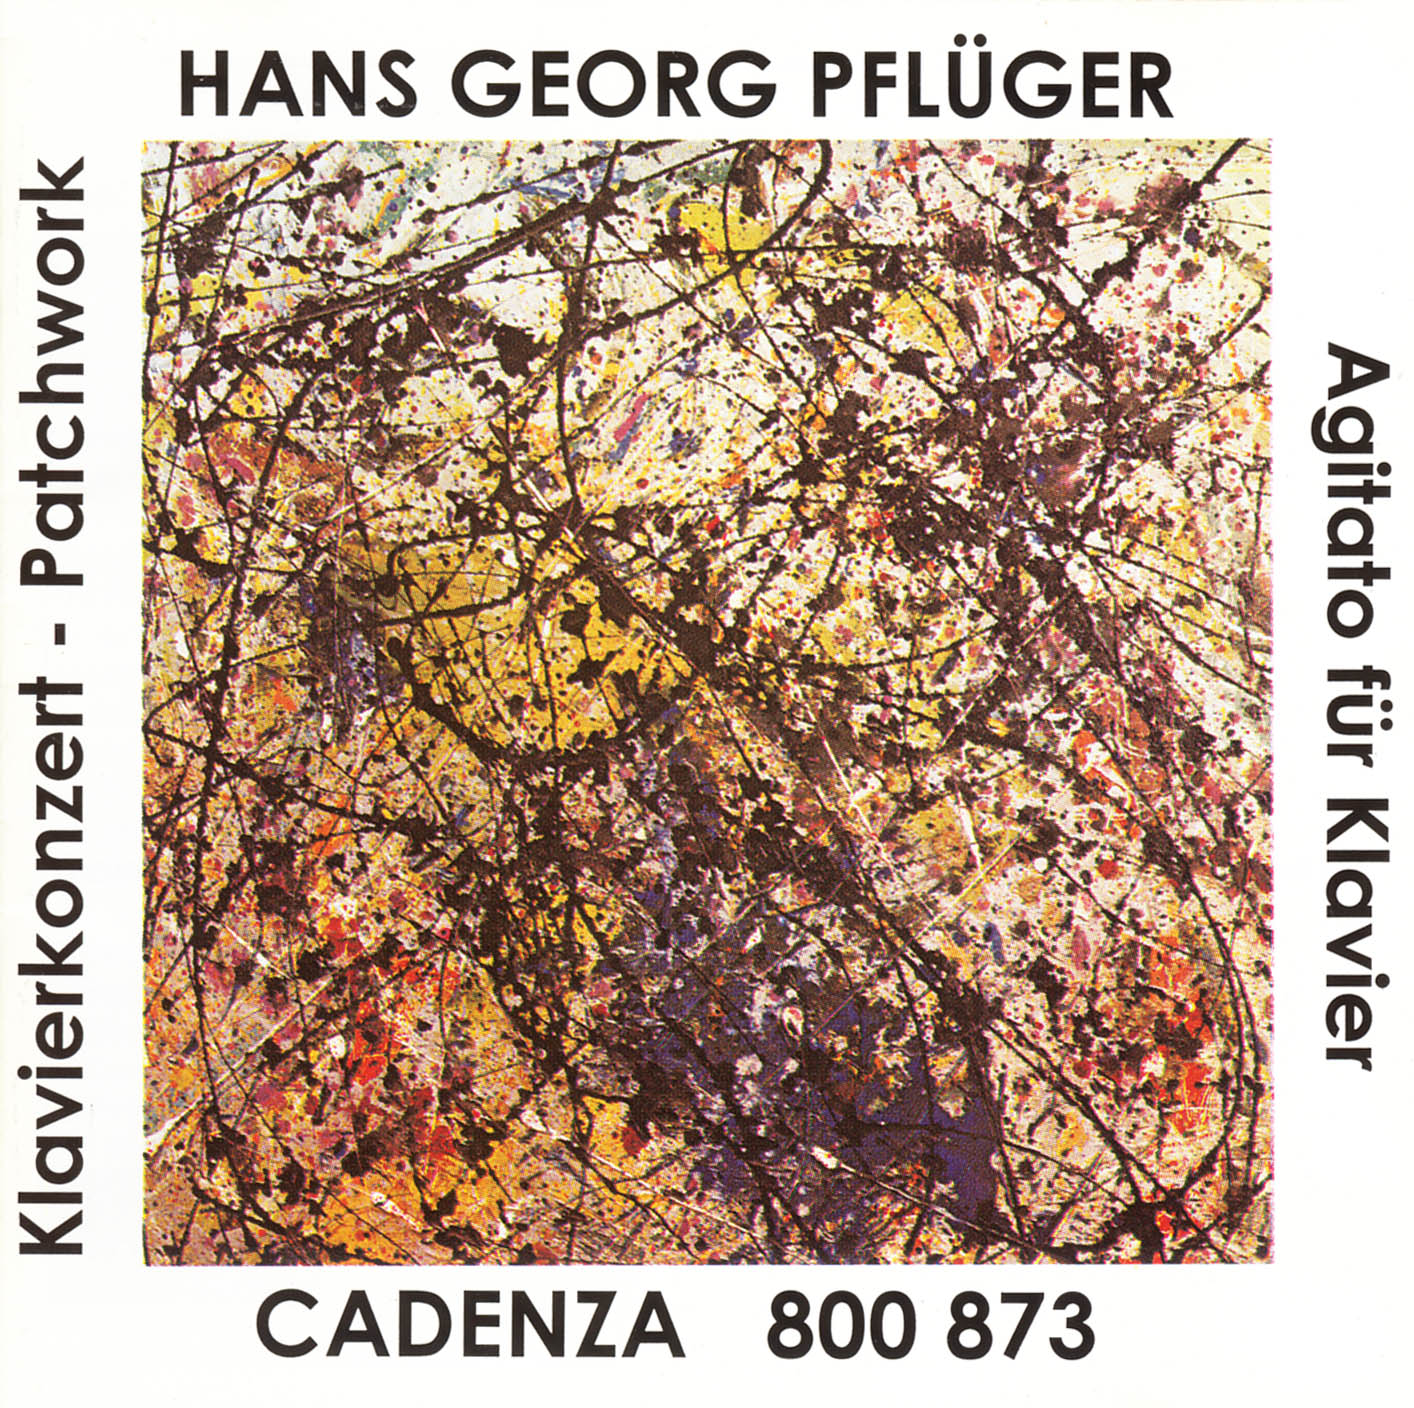 Hans Georg Pflüger - Klavierkonzert